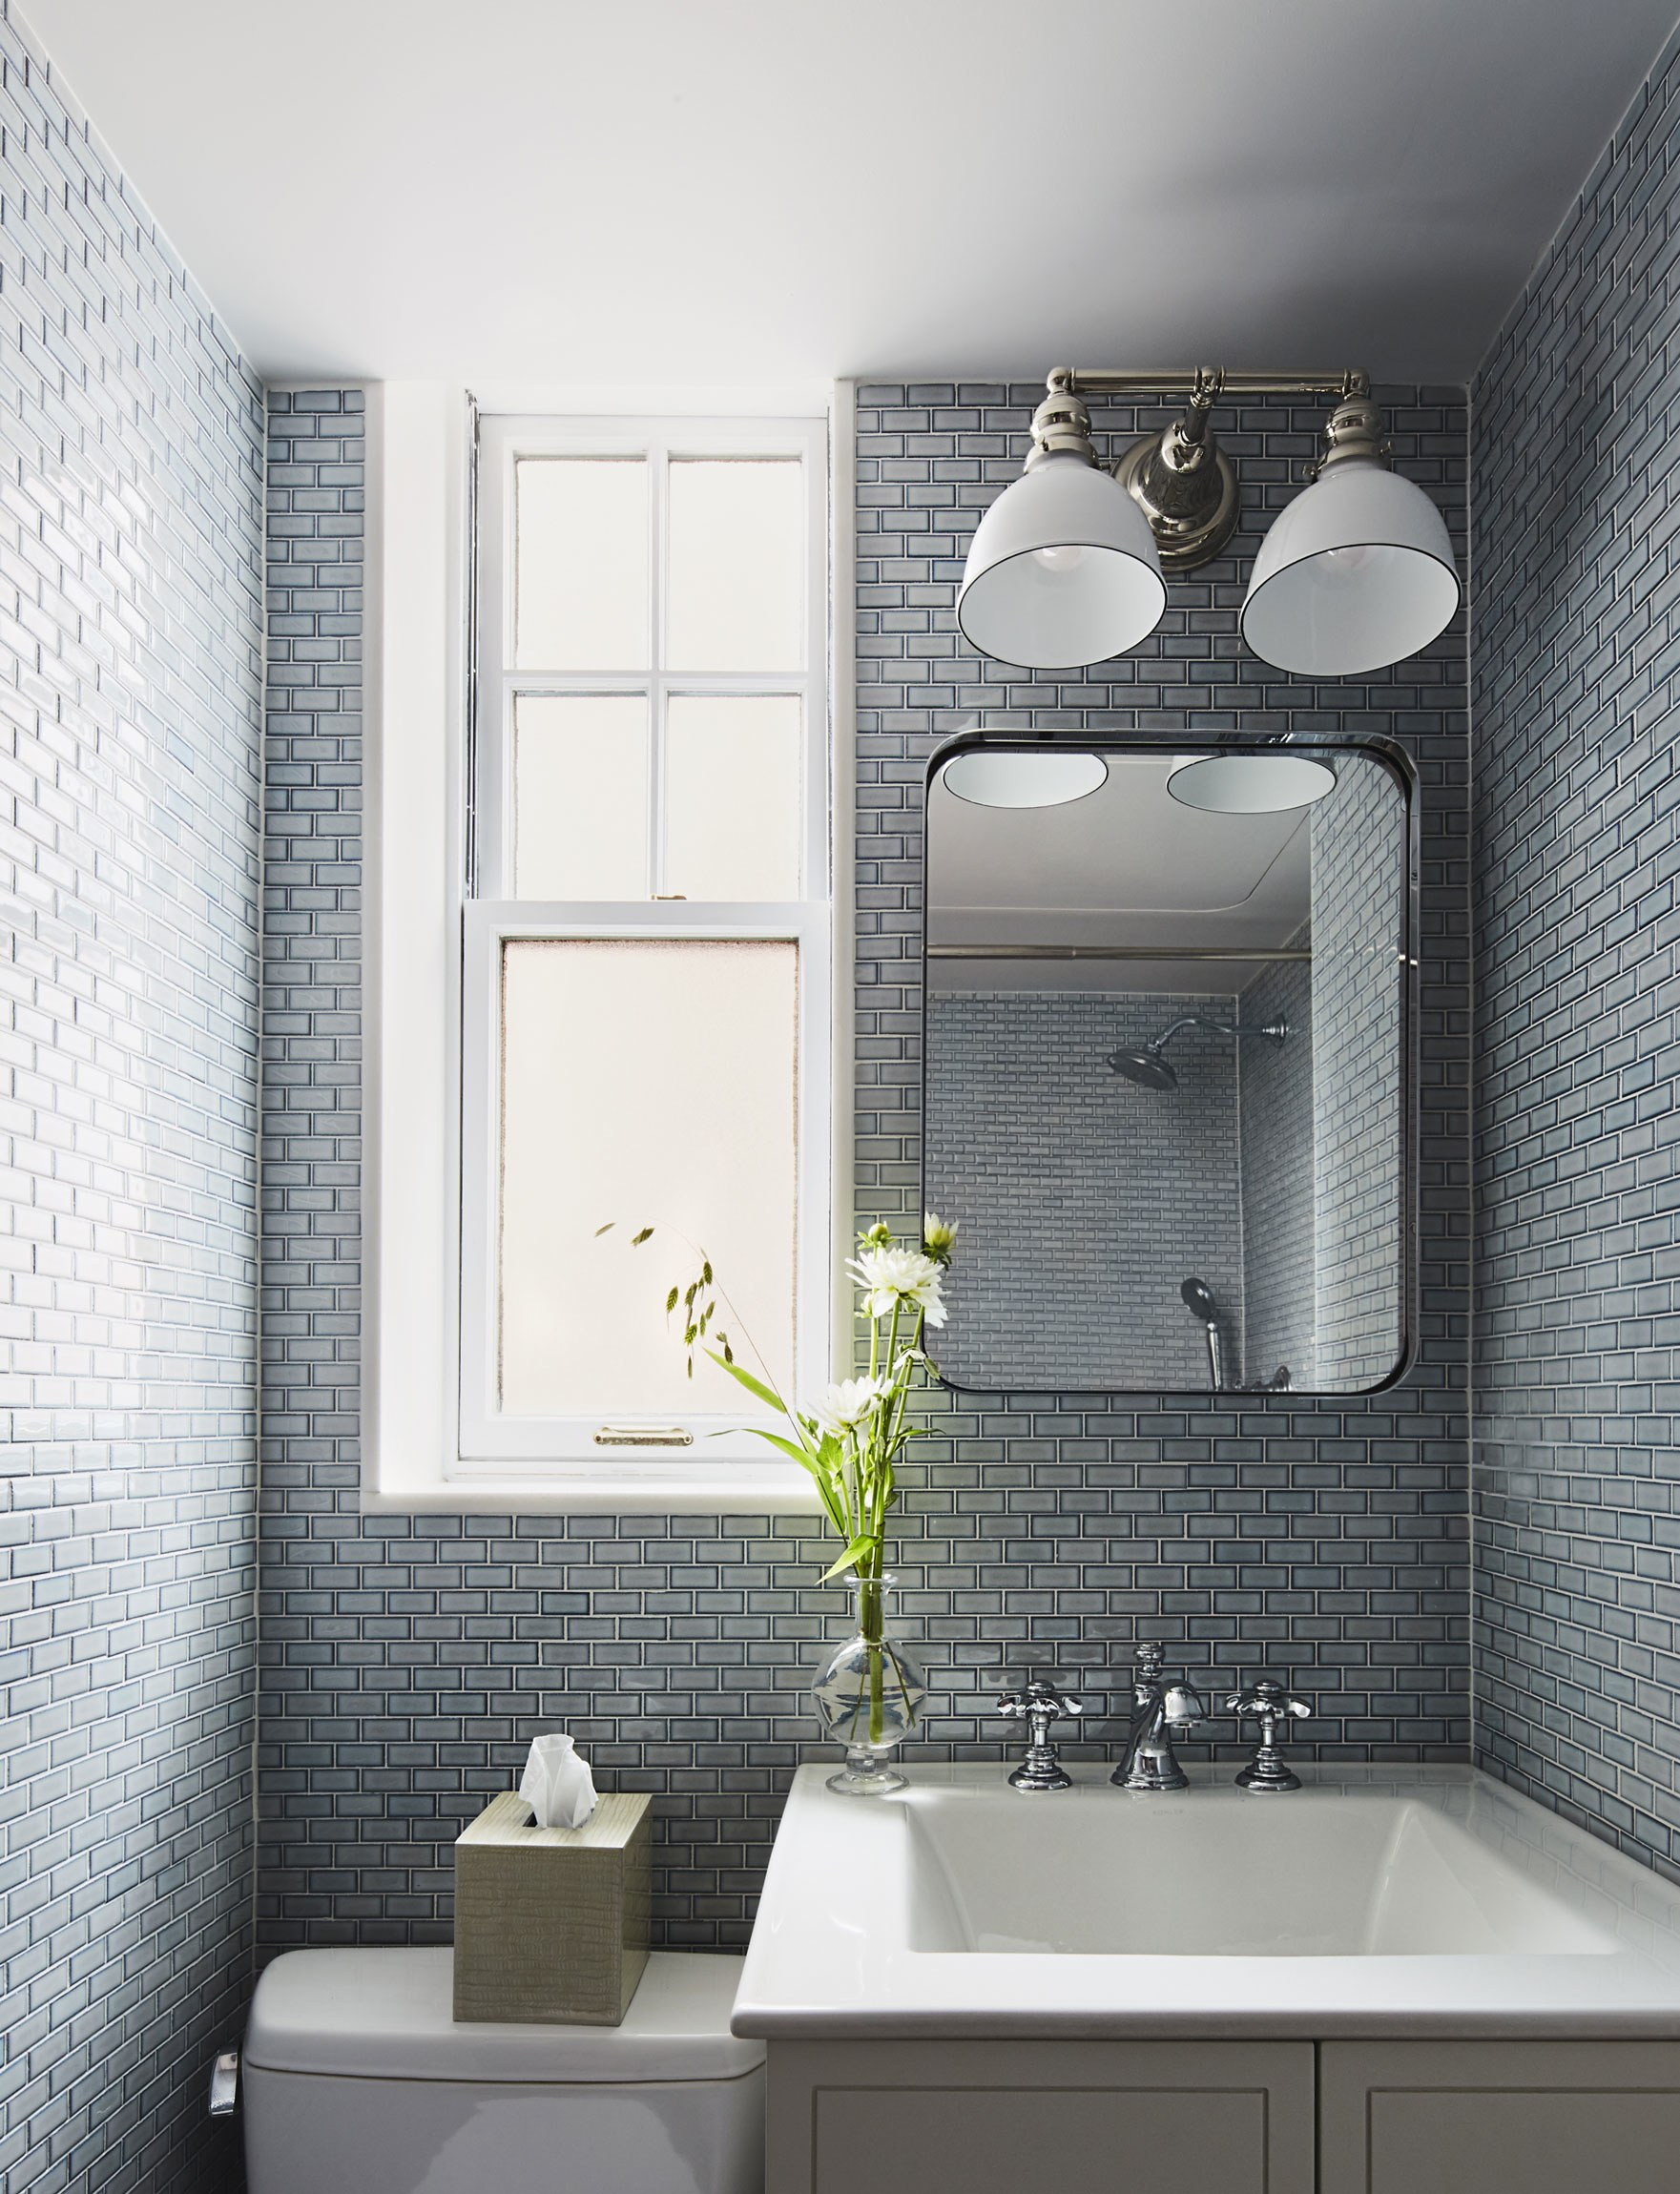 Small Bathroom Tile Design
 This Bathroom Tile Design Idea Changes Everything